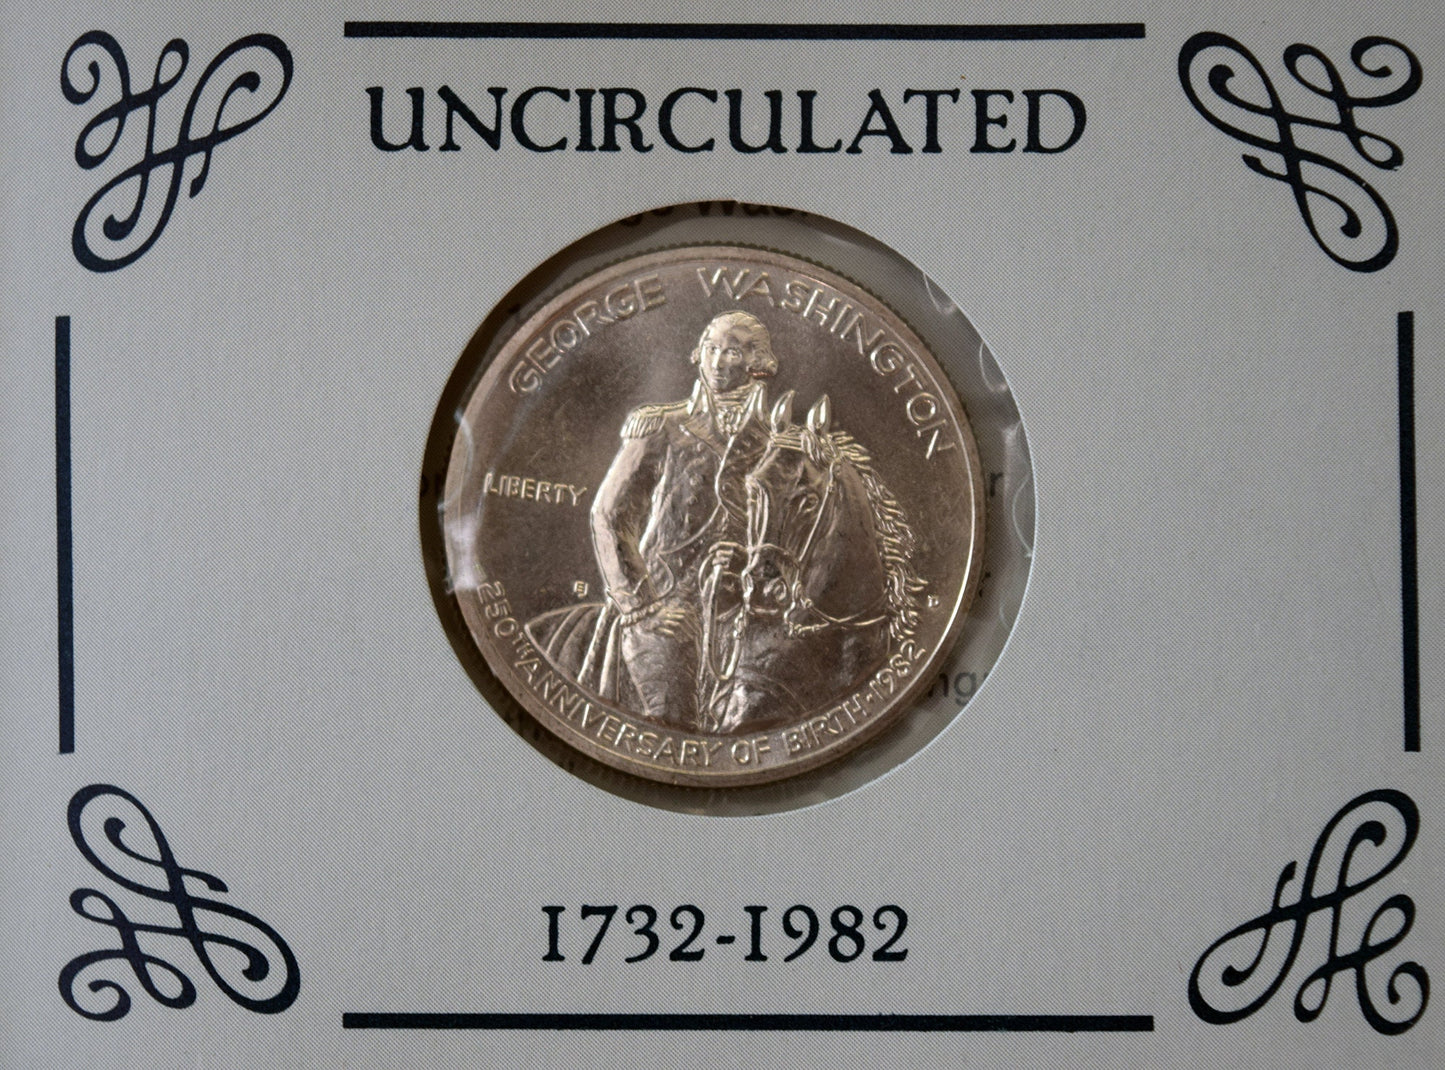 1982 Uncirculated Washington Half-Dollar, with original packaging and COA